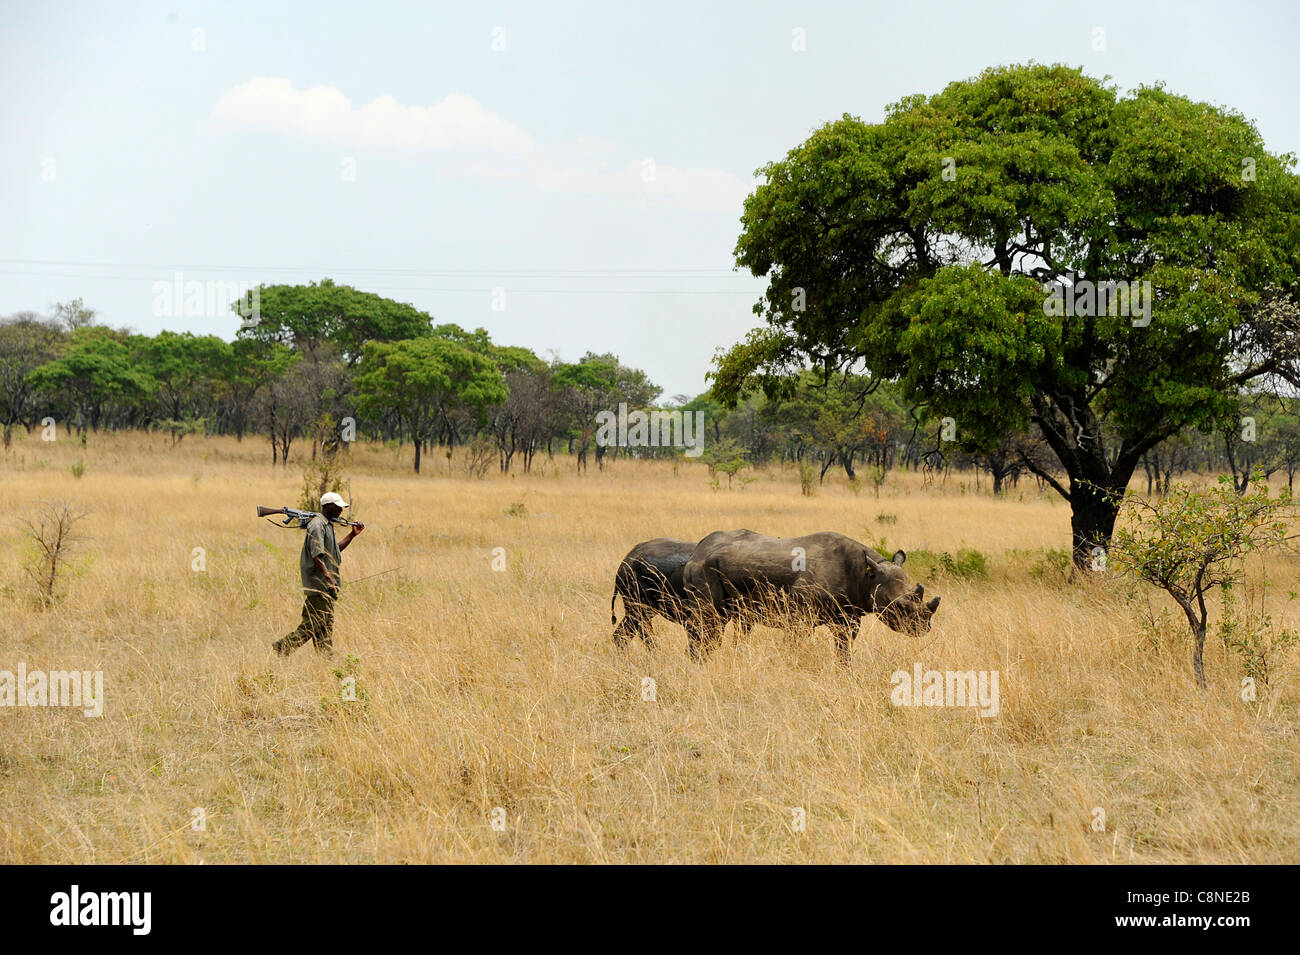 Black rhinoceros in Imire Safari Ranch, Zimbabwe. A guard follows the rhino for protection against poachers. Stock Photo